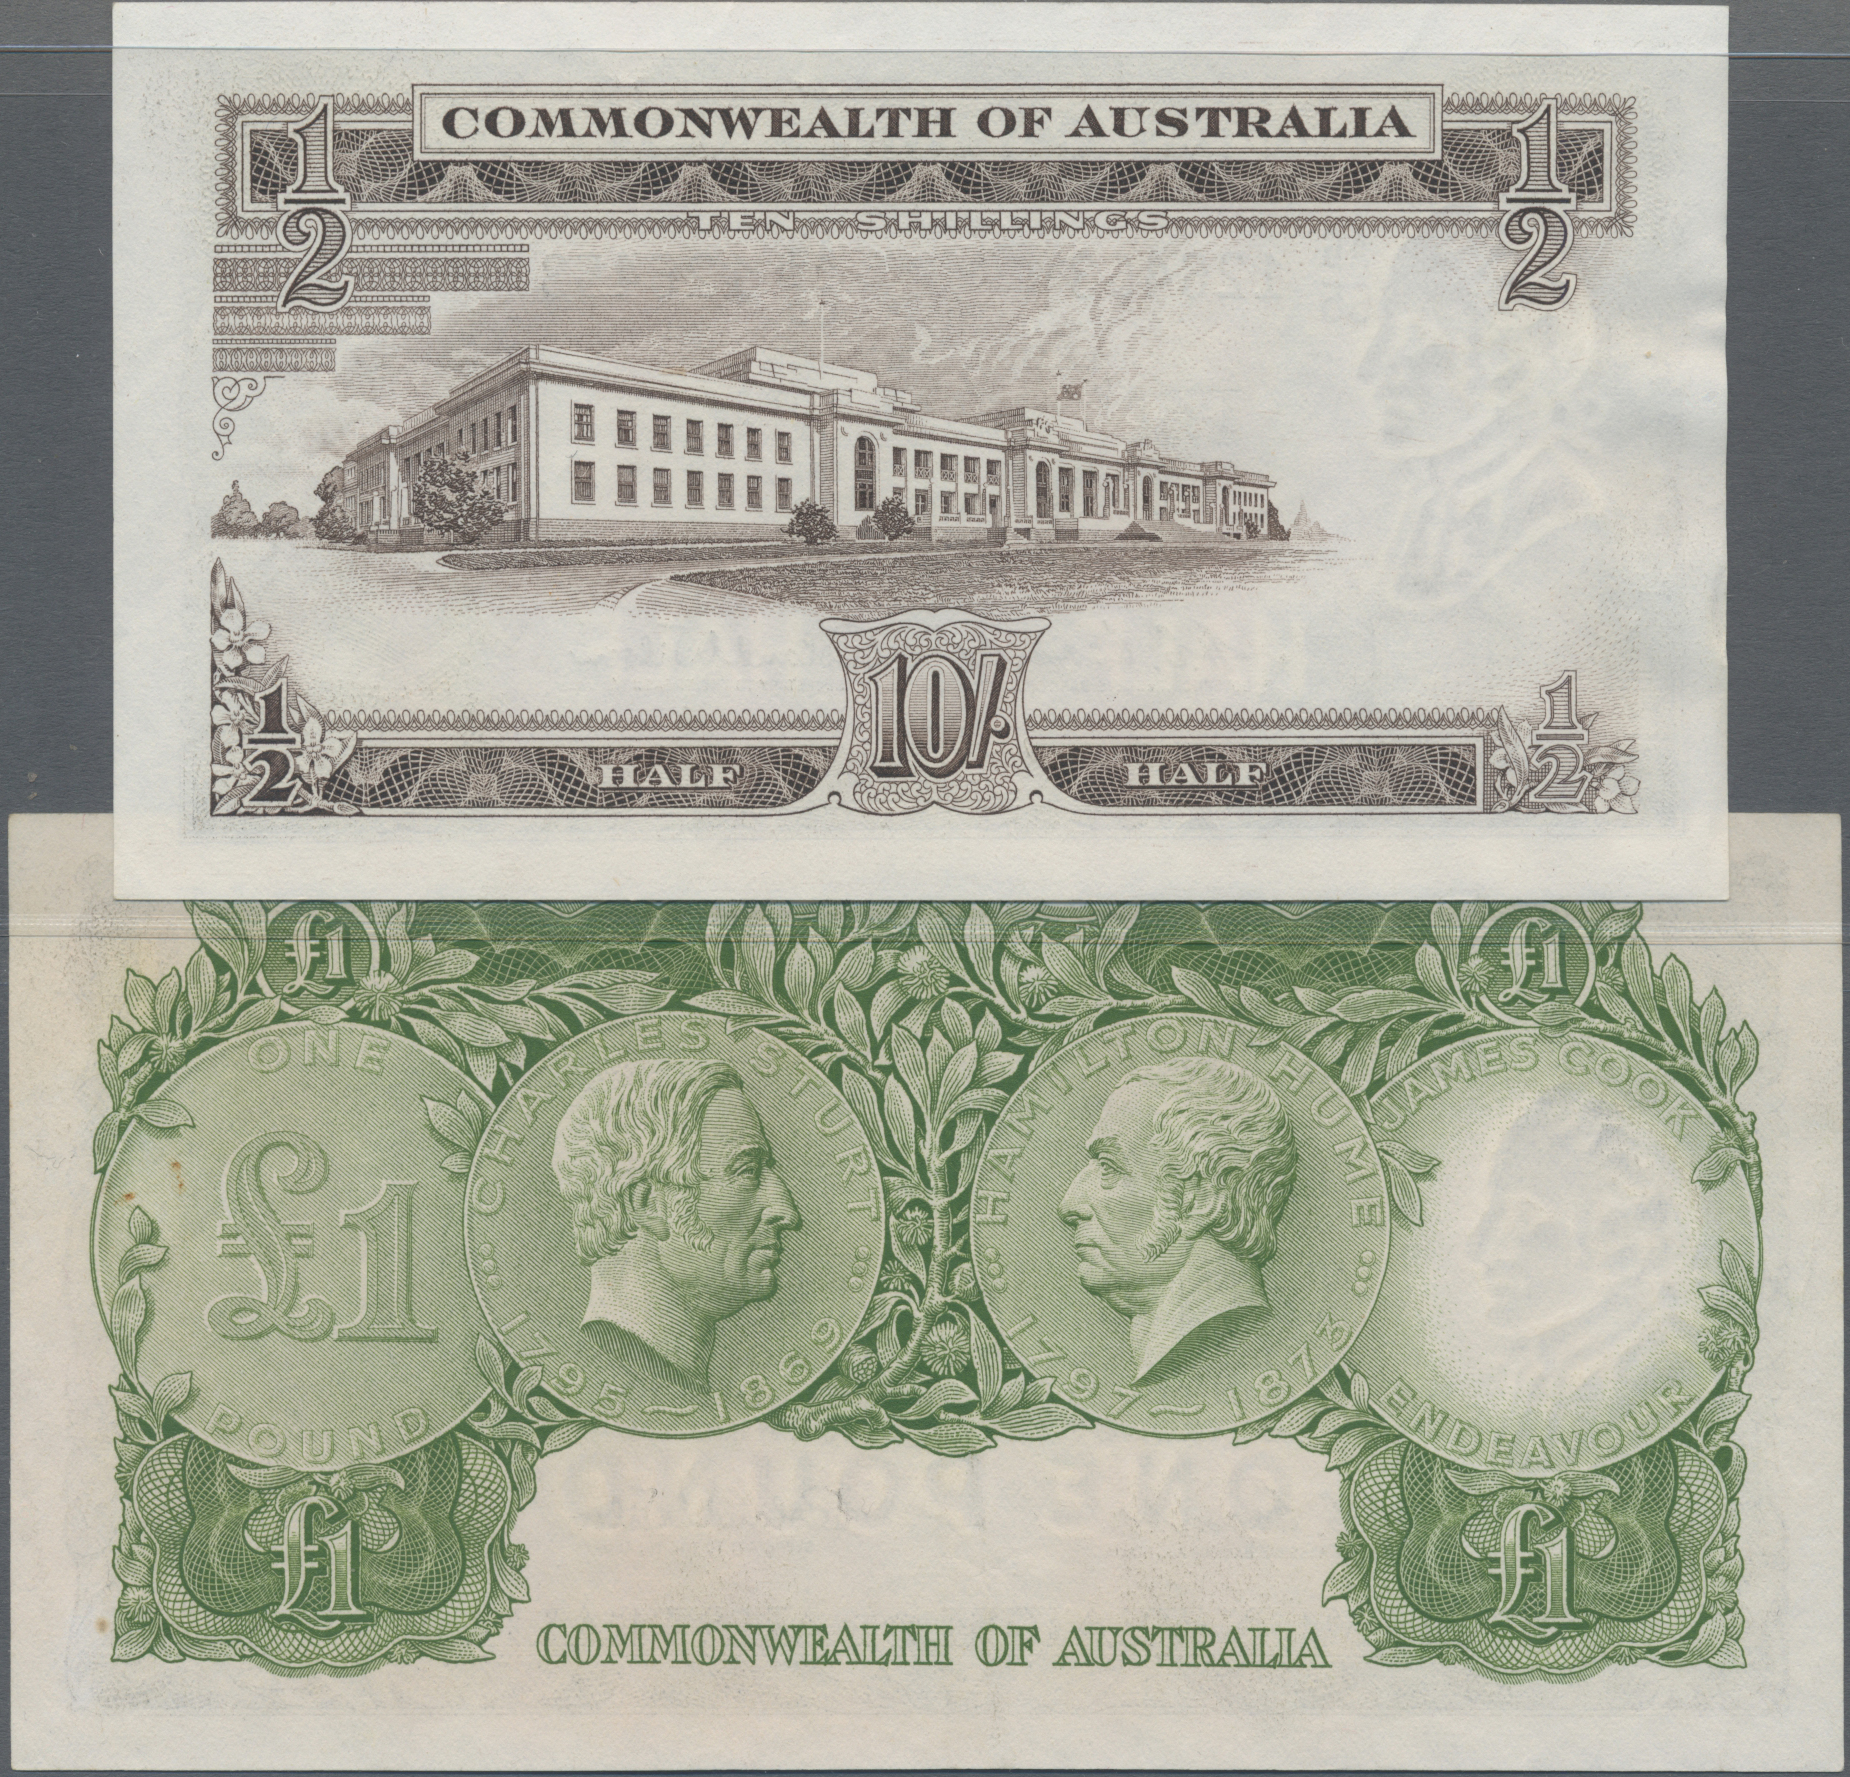 Lot 00006 - Australia / Australien | Banknoten  -  Auktionshaus Christoph Gärtner GmbH & Co. KG 54th AUCTION - Day 1 Coins & Banknotes